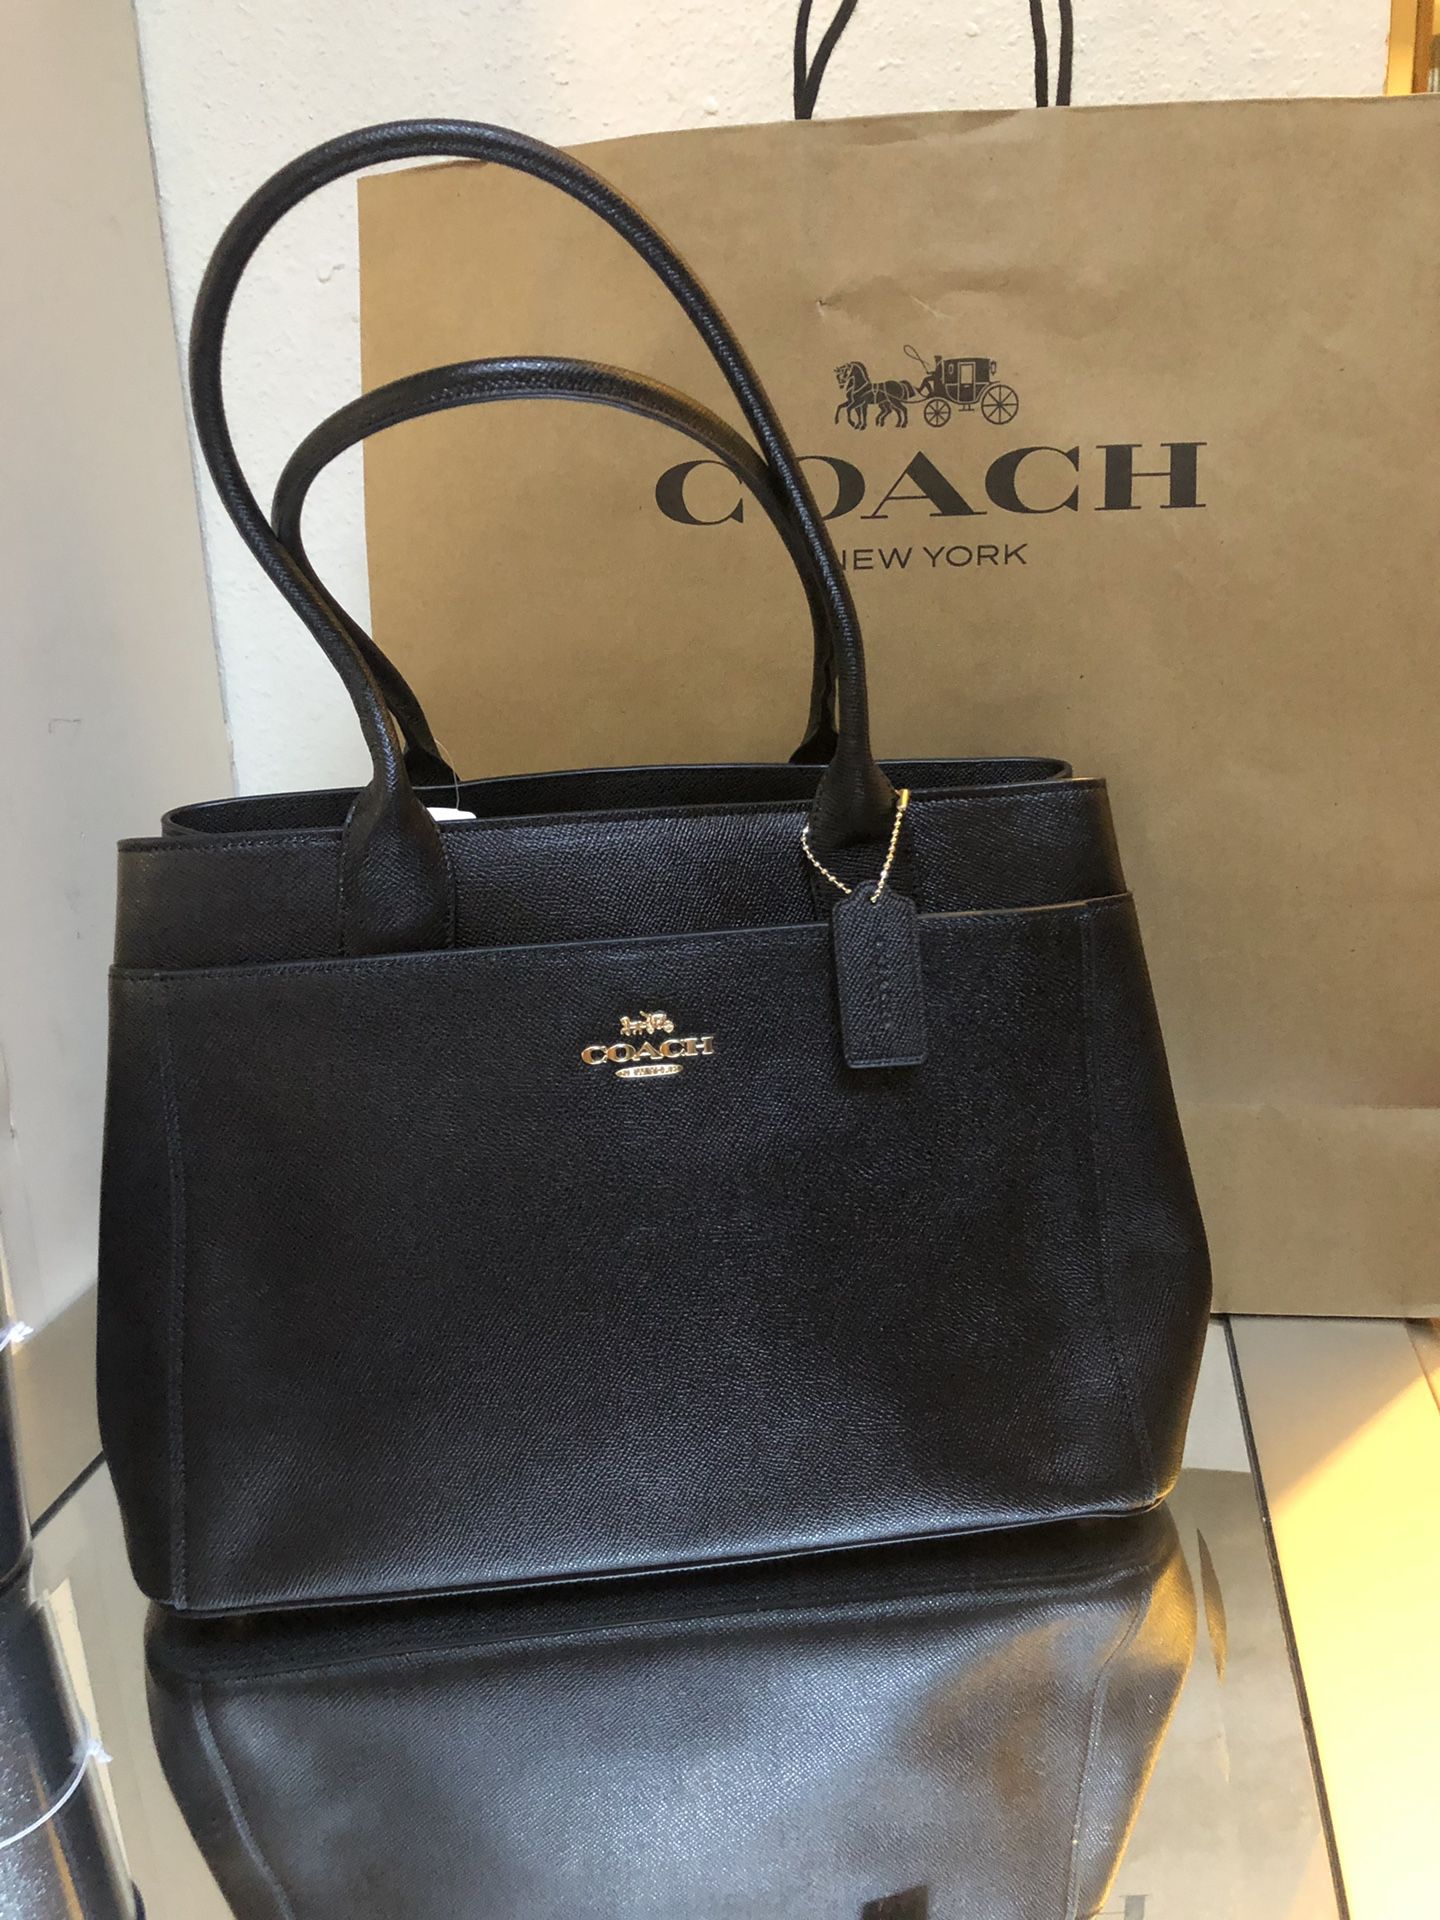 Coach bag new